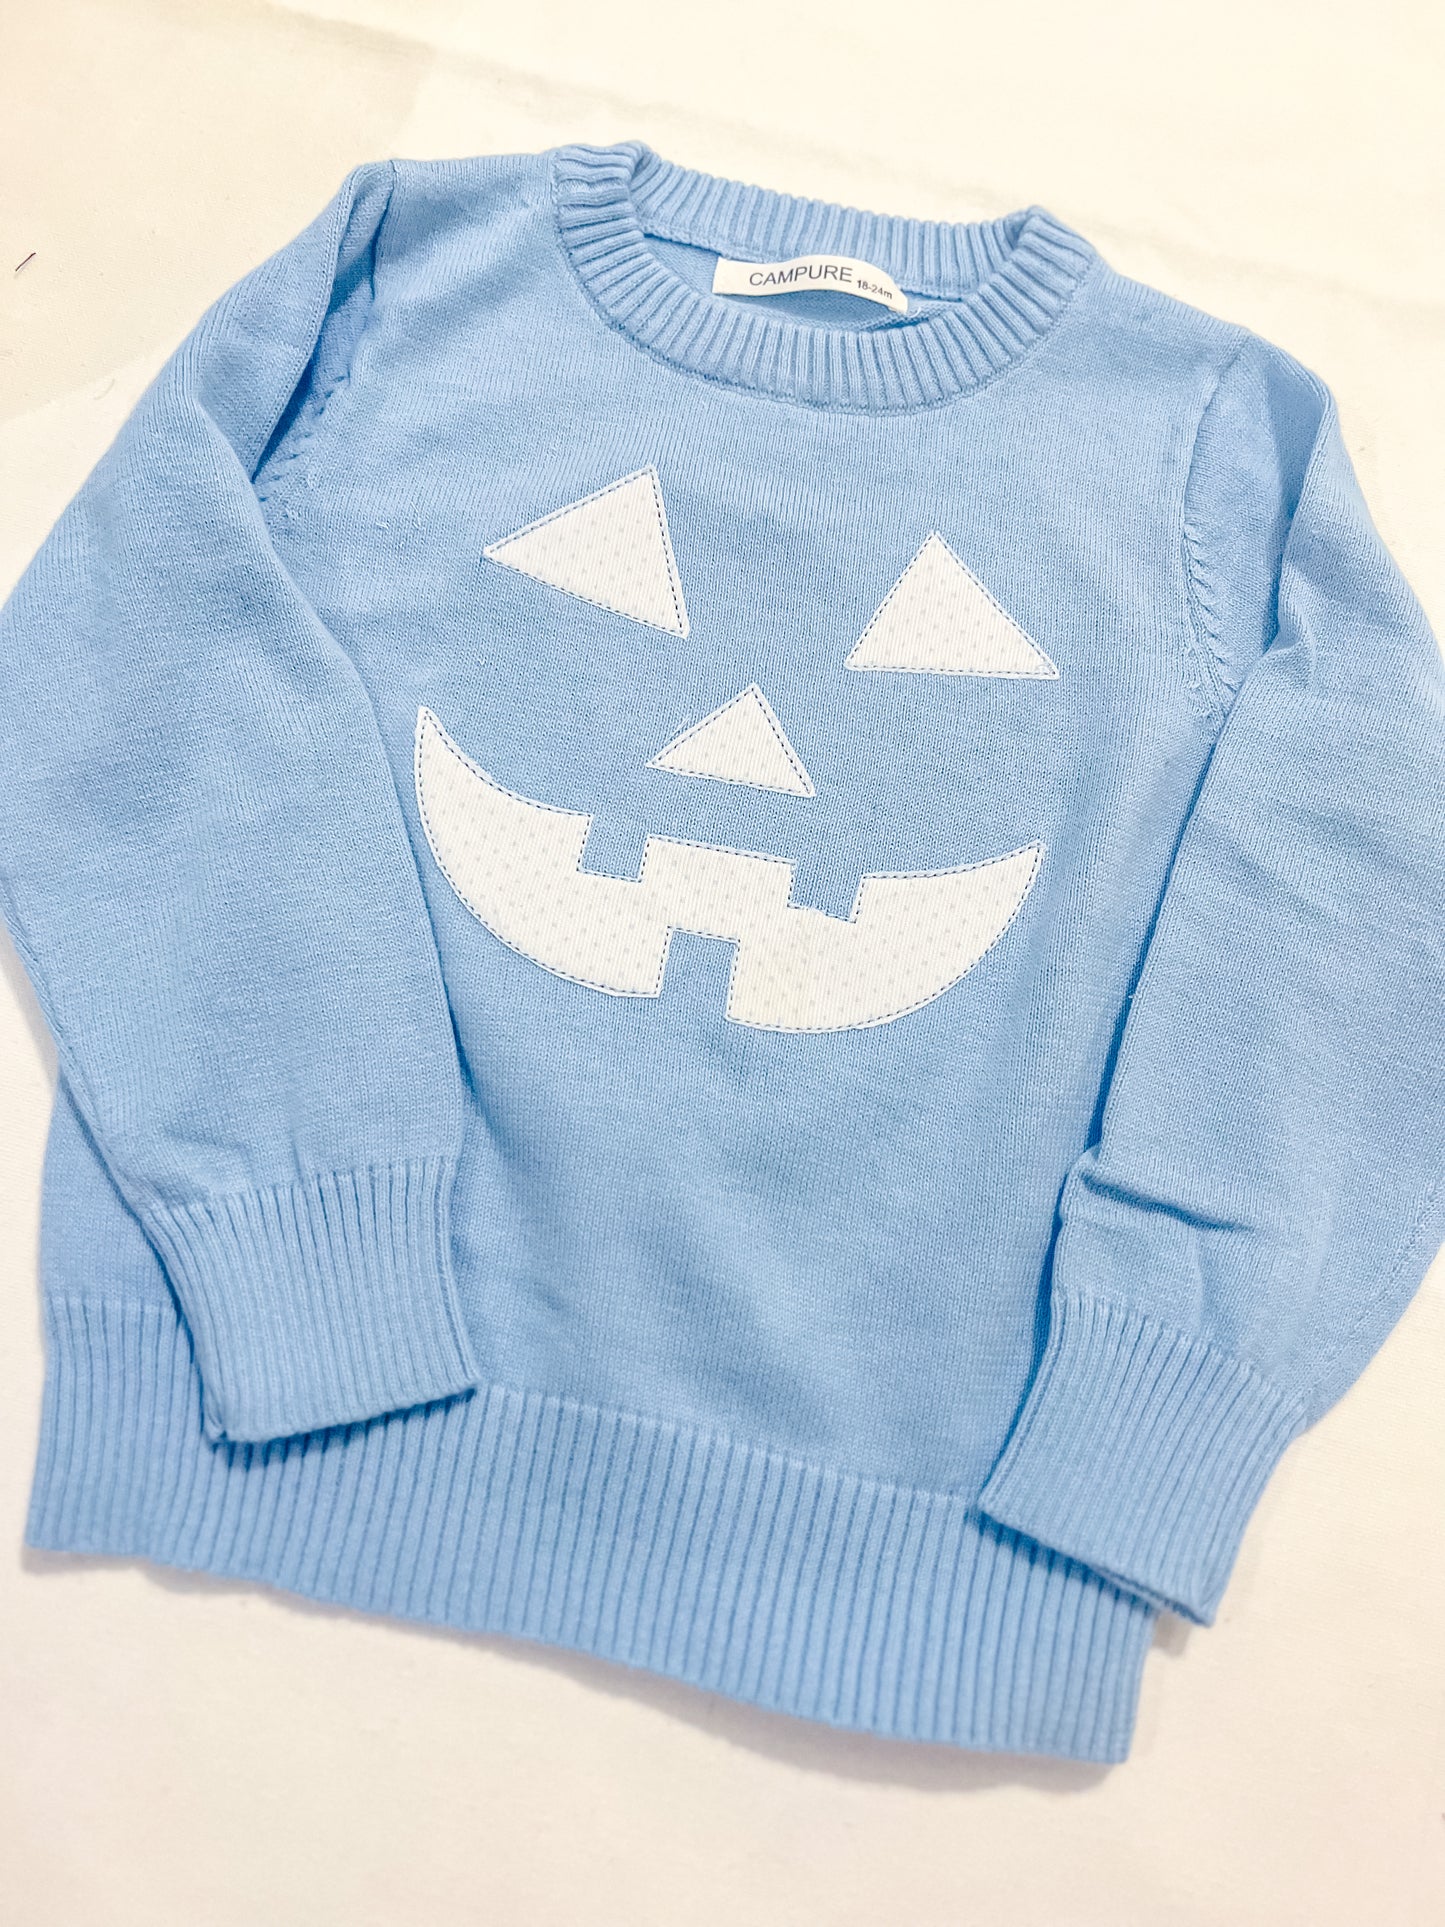 Boys Jack-o-lantern sweater